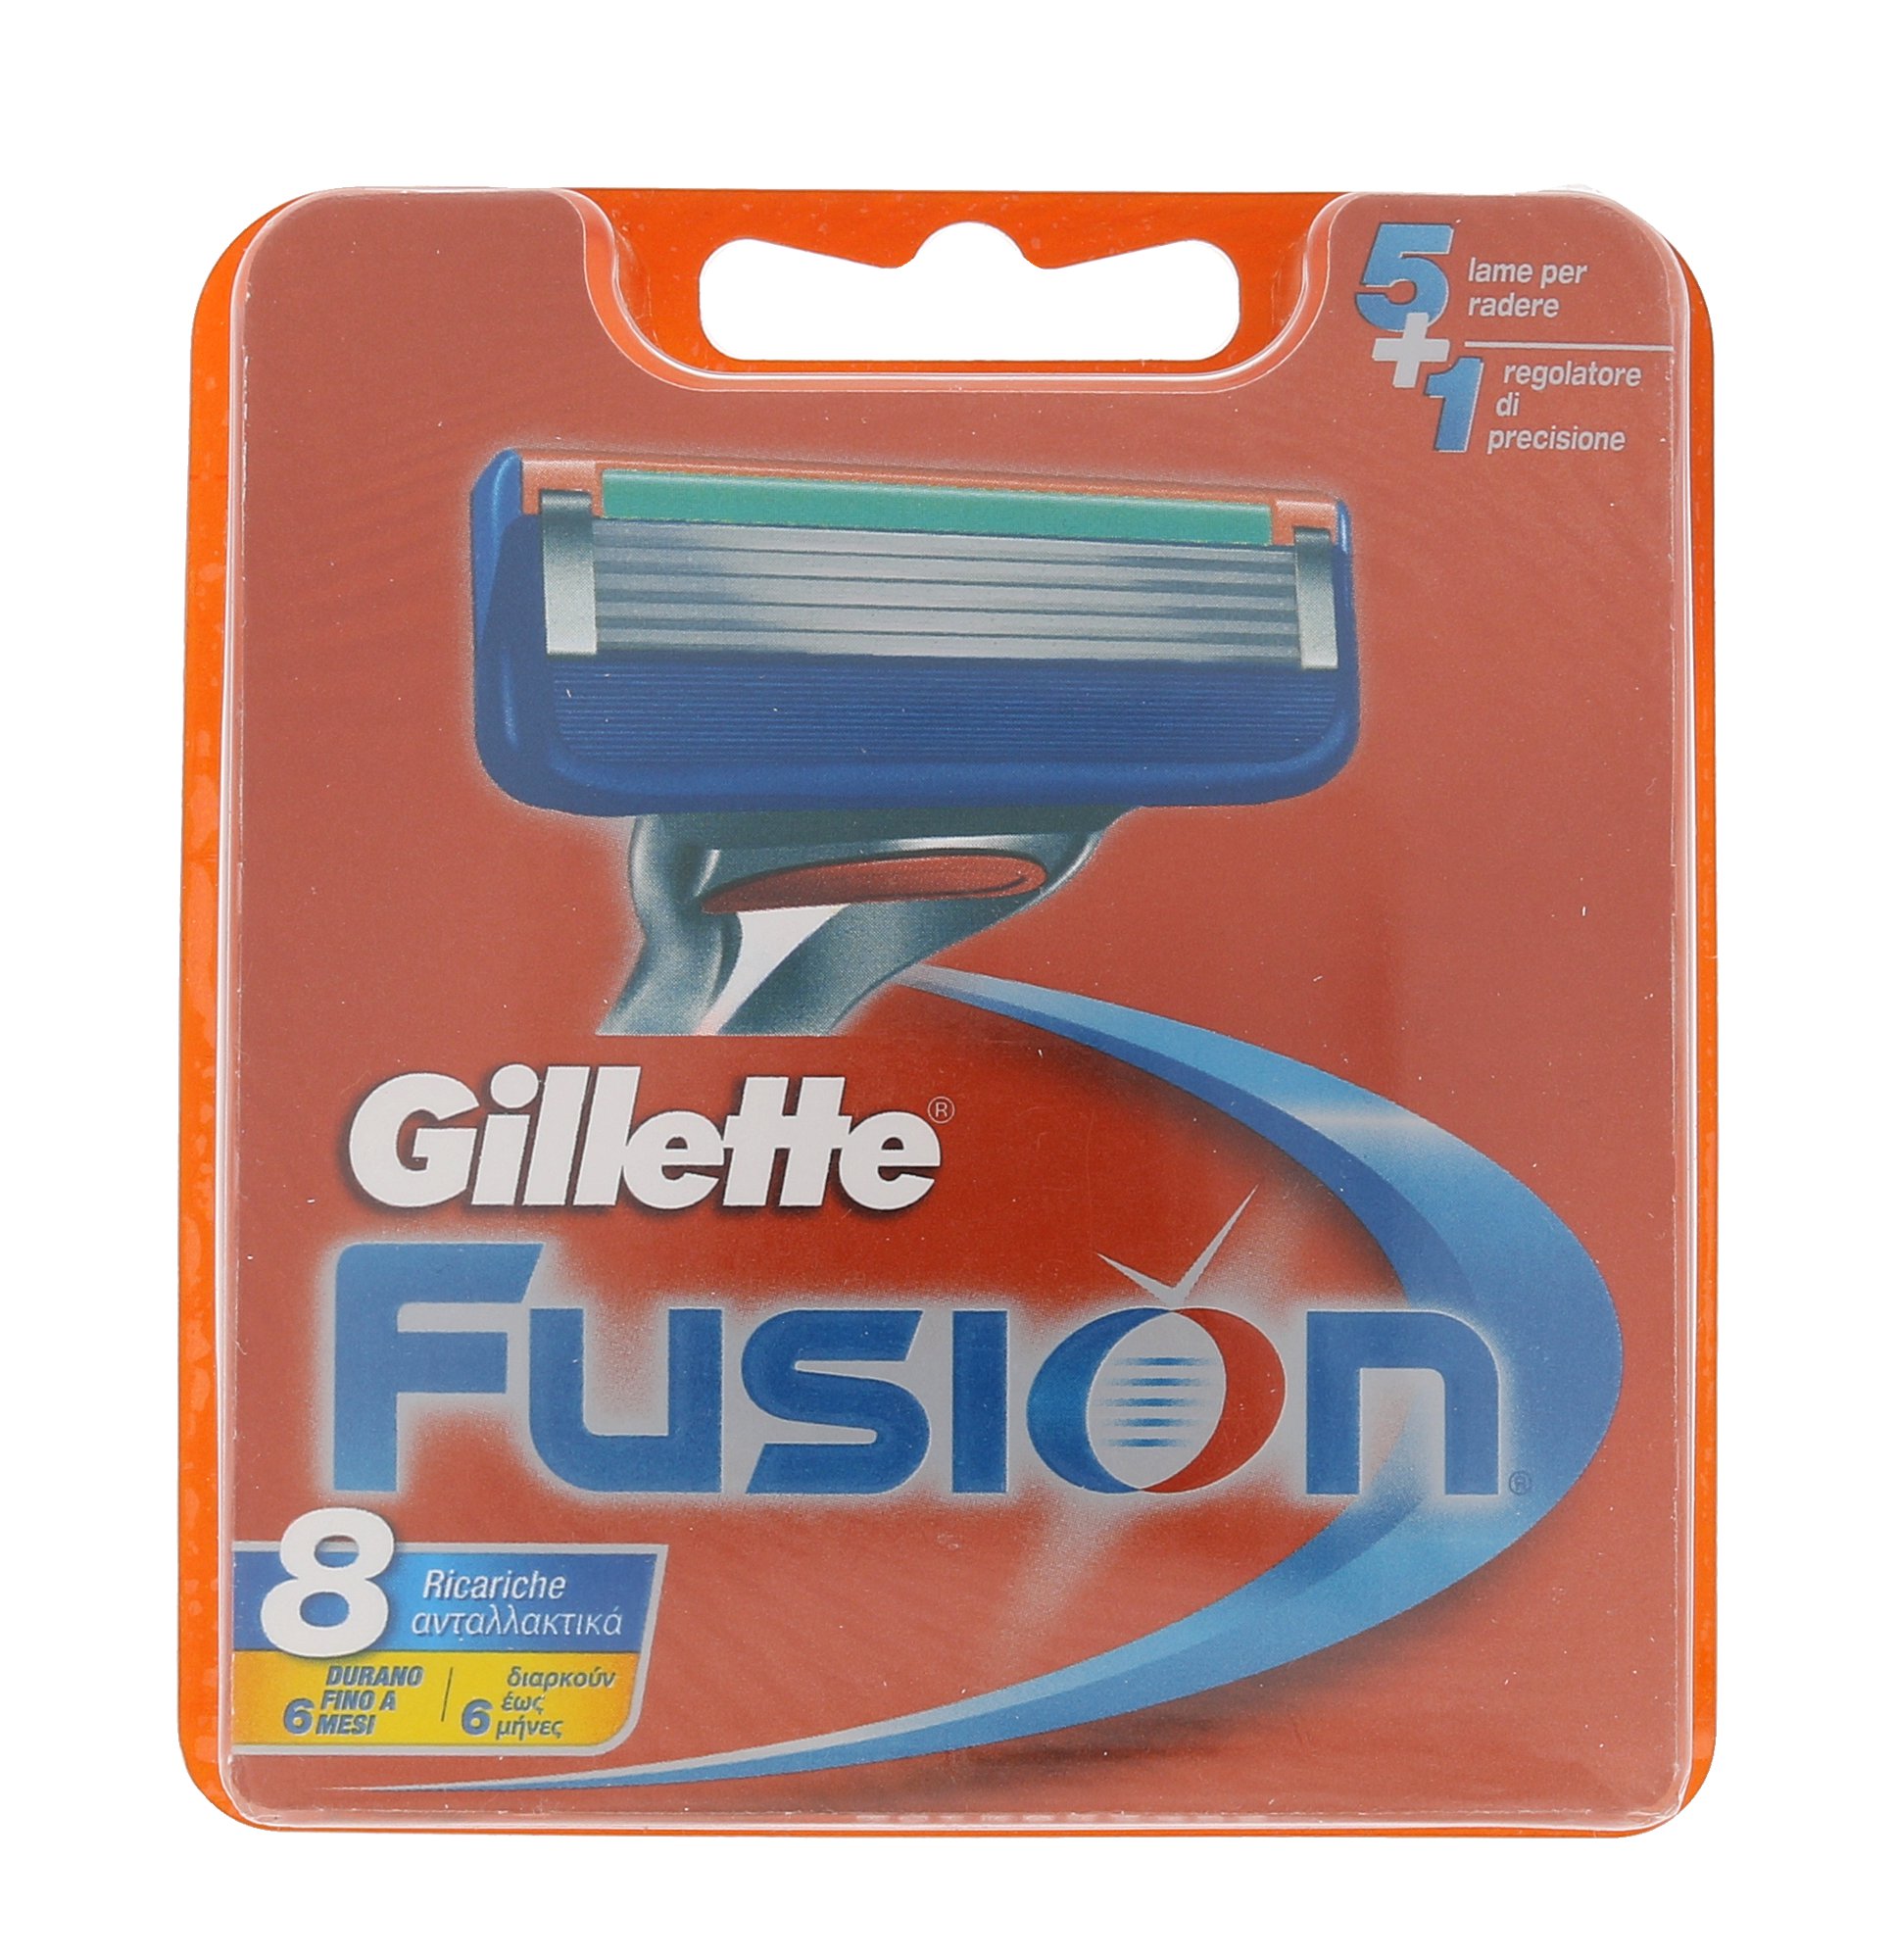 Gillette Fusion (M)